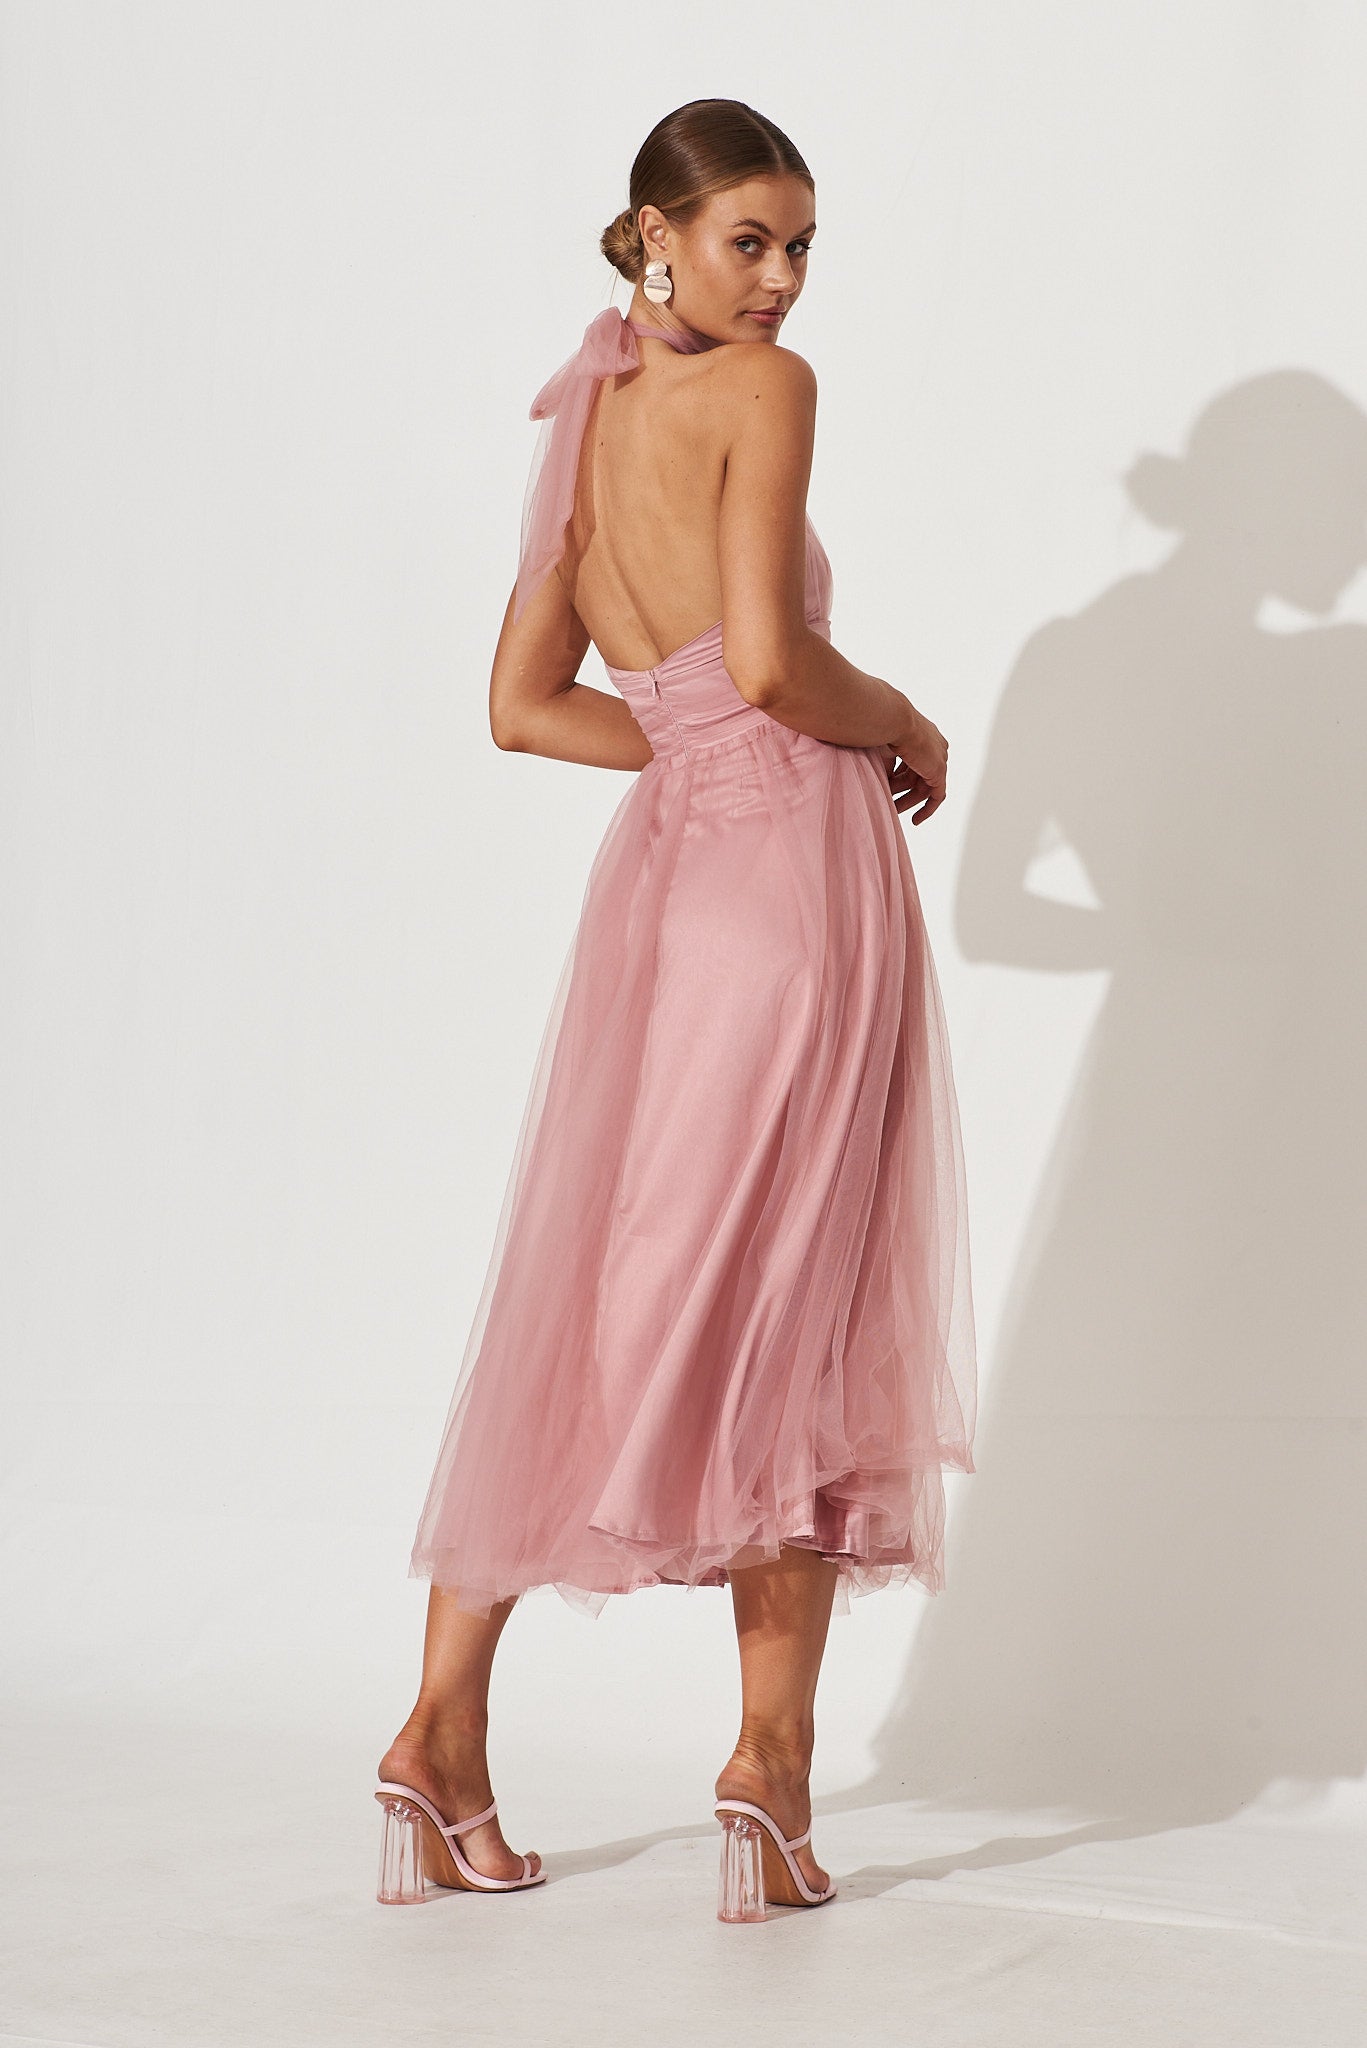 Kate V Pink blush backless bridesmaid dress Cocktail Party dress